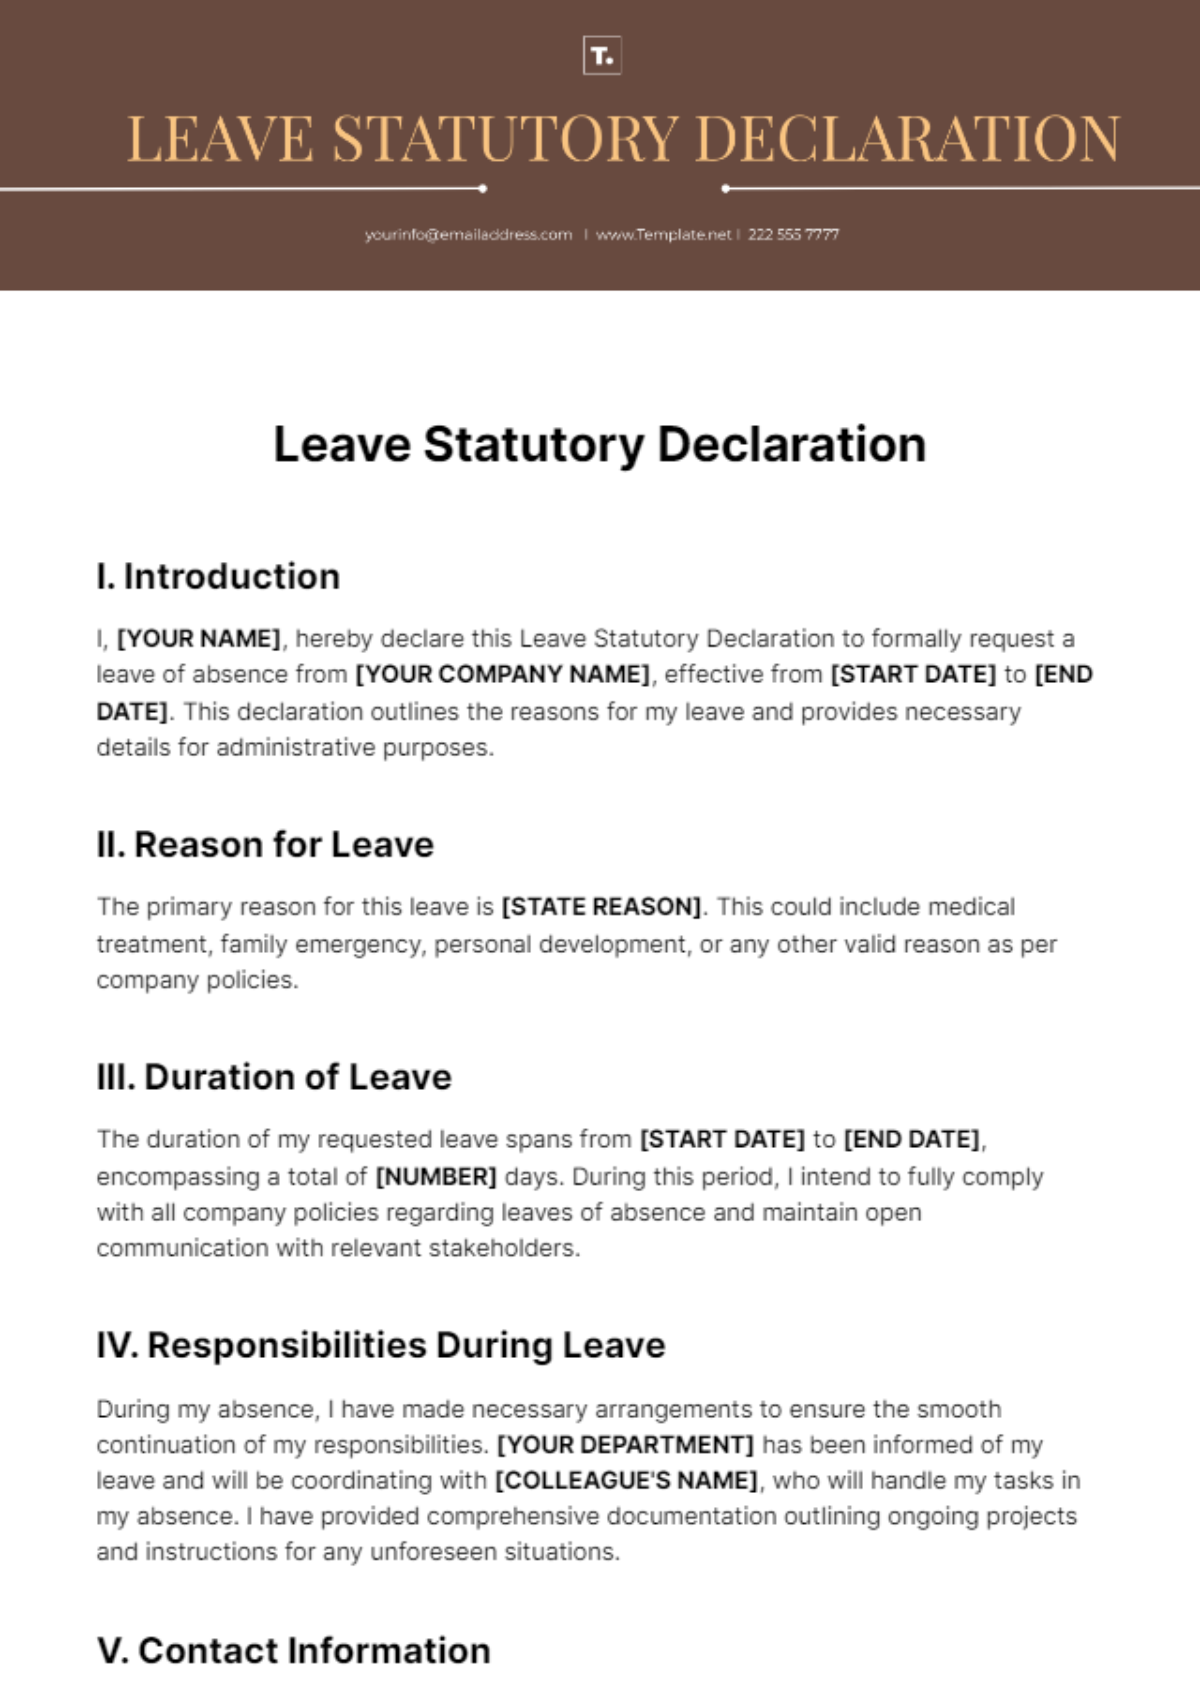 Leave Statutory Declaration Template